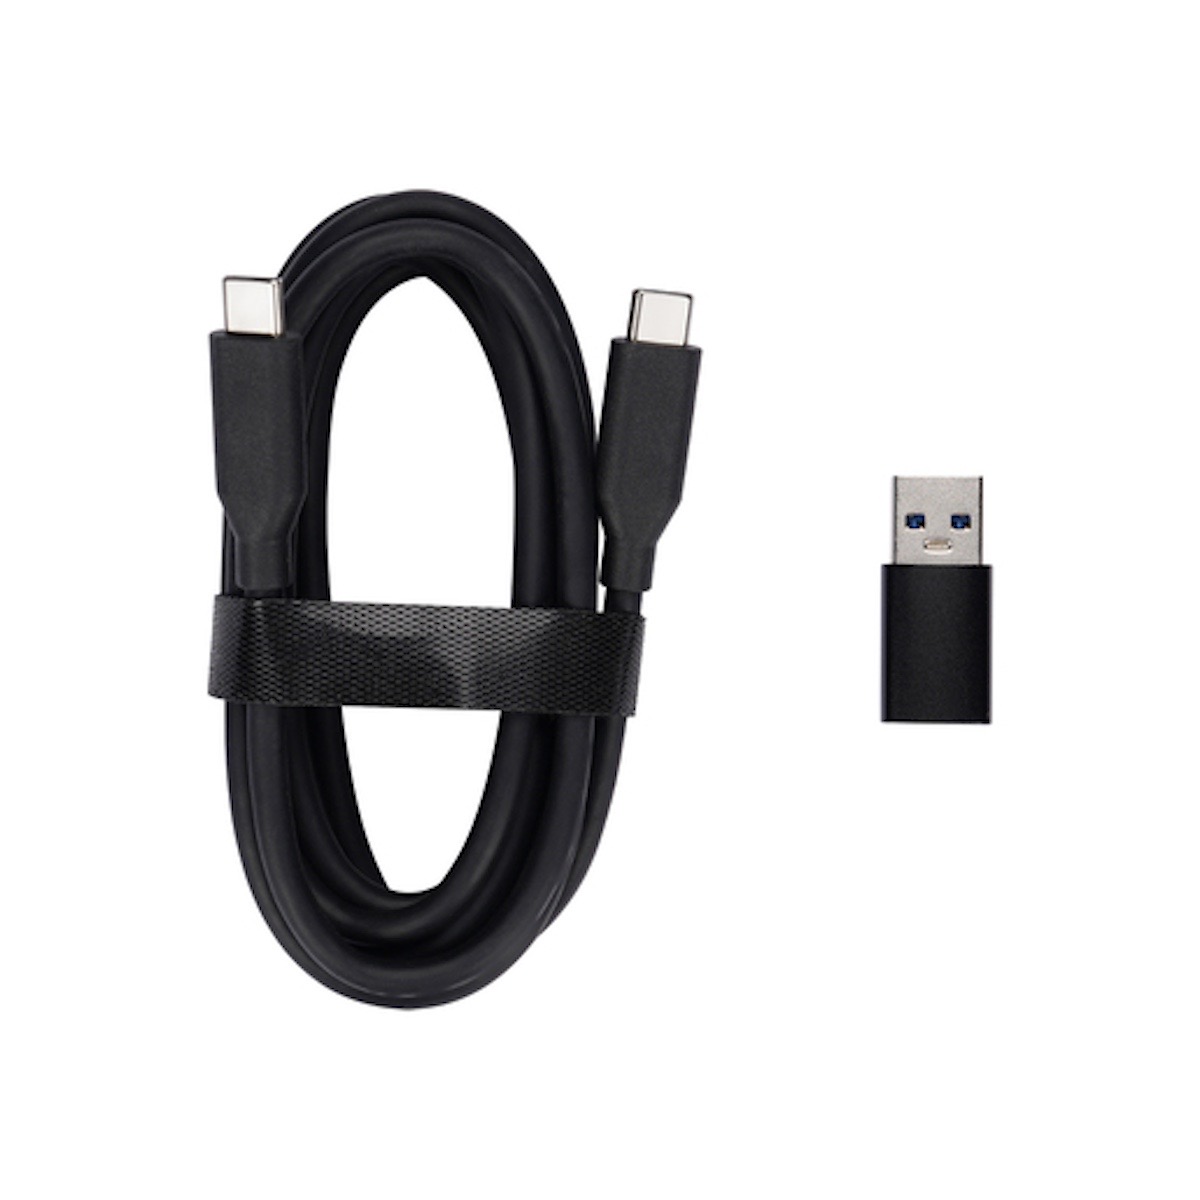 Obsbot USB-C 3.0 Kabel & USB-C an USB-A 3.0 Adapter